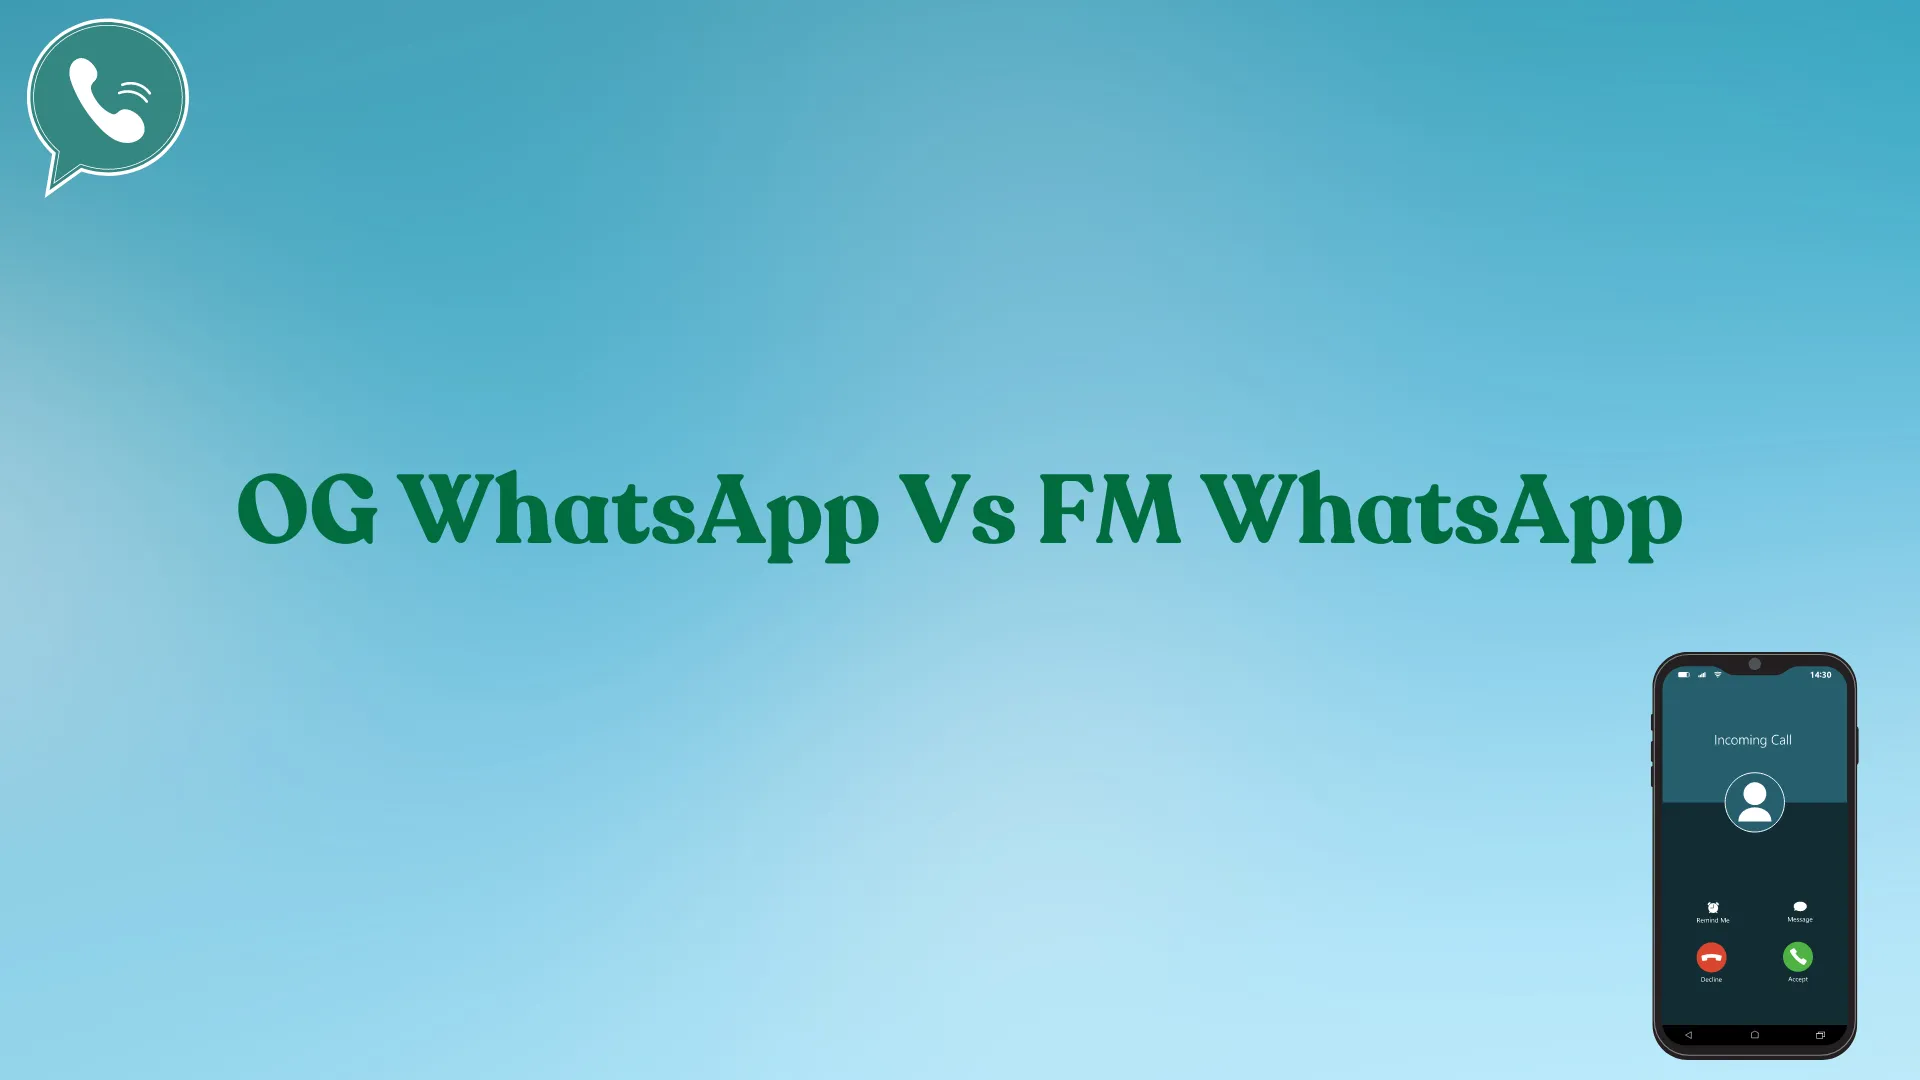 OG WhatsApp VS FM WhatsApp Infographic